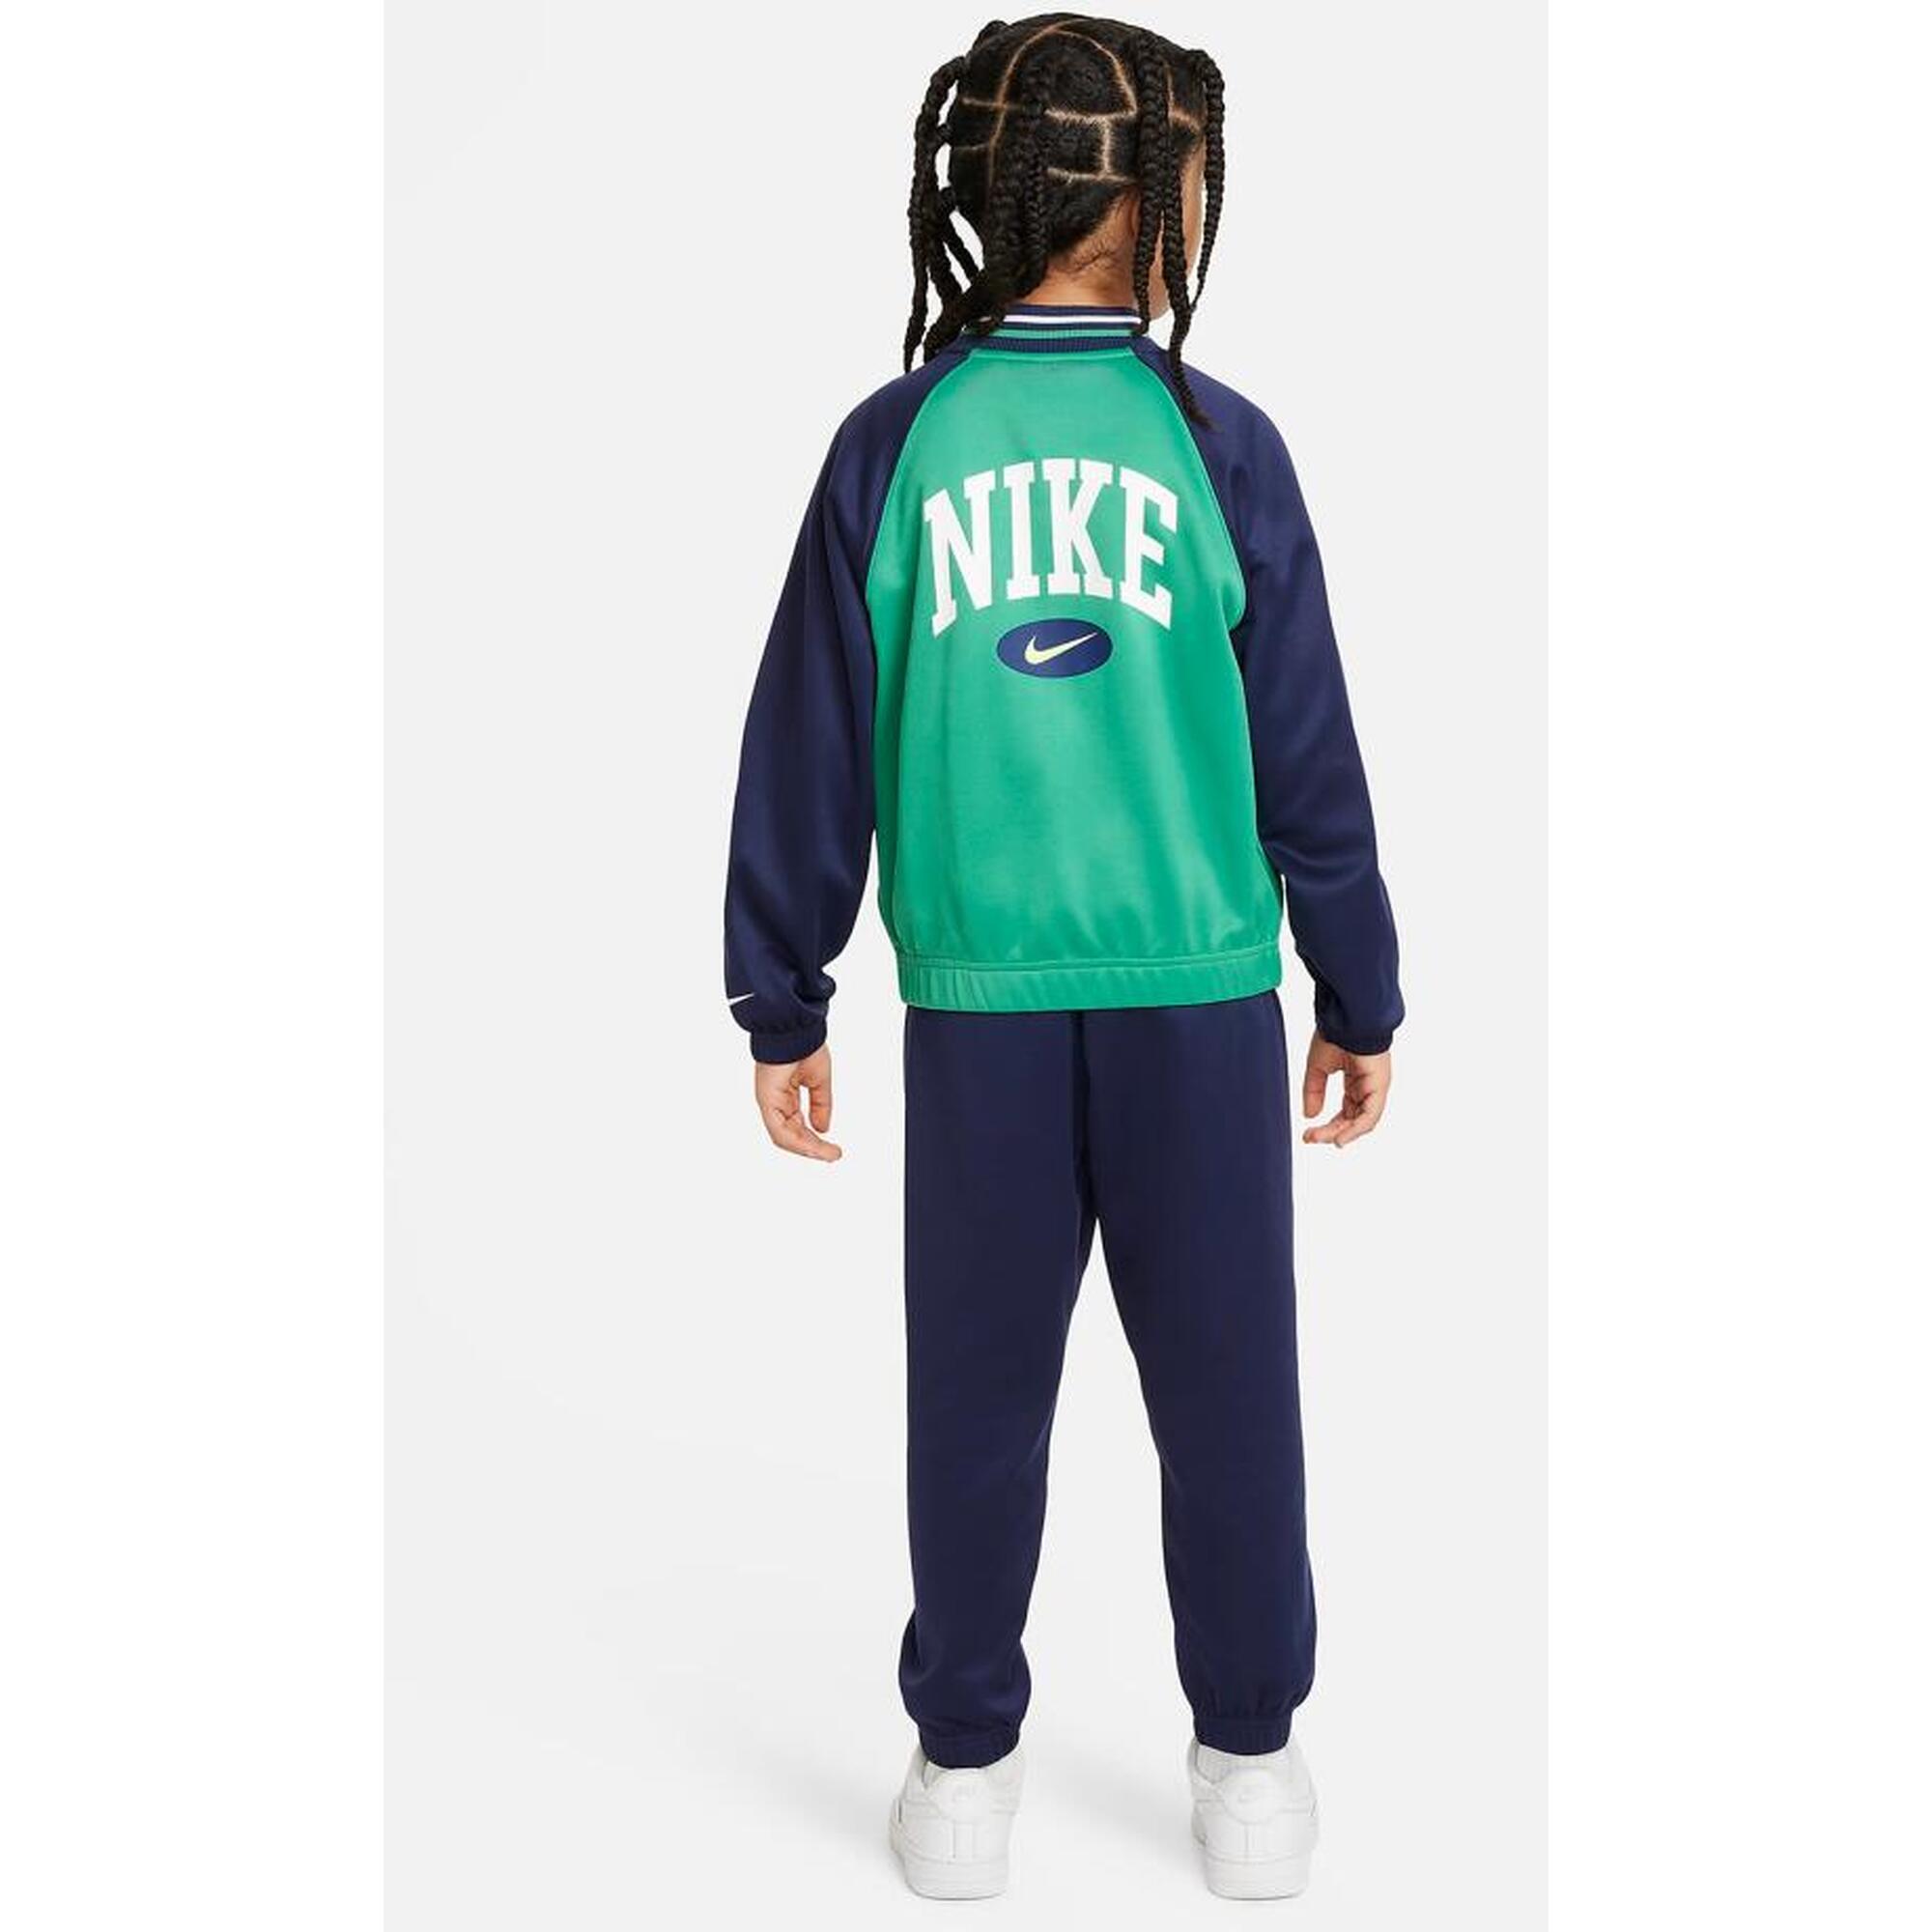 Tuta bambino nike sportswear next gen - verde/blu